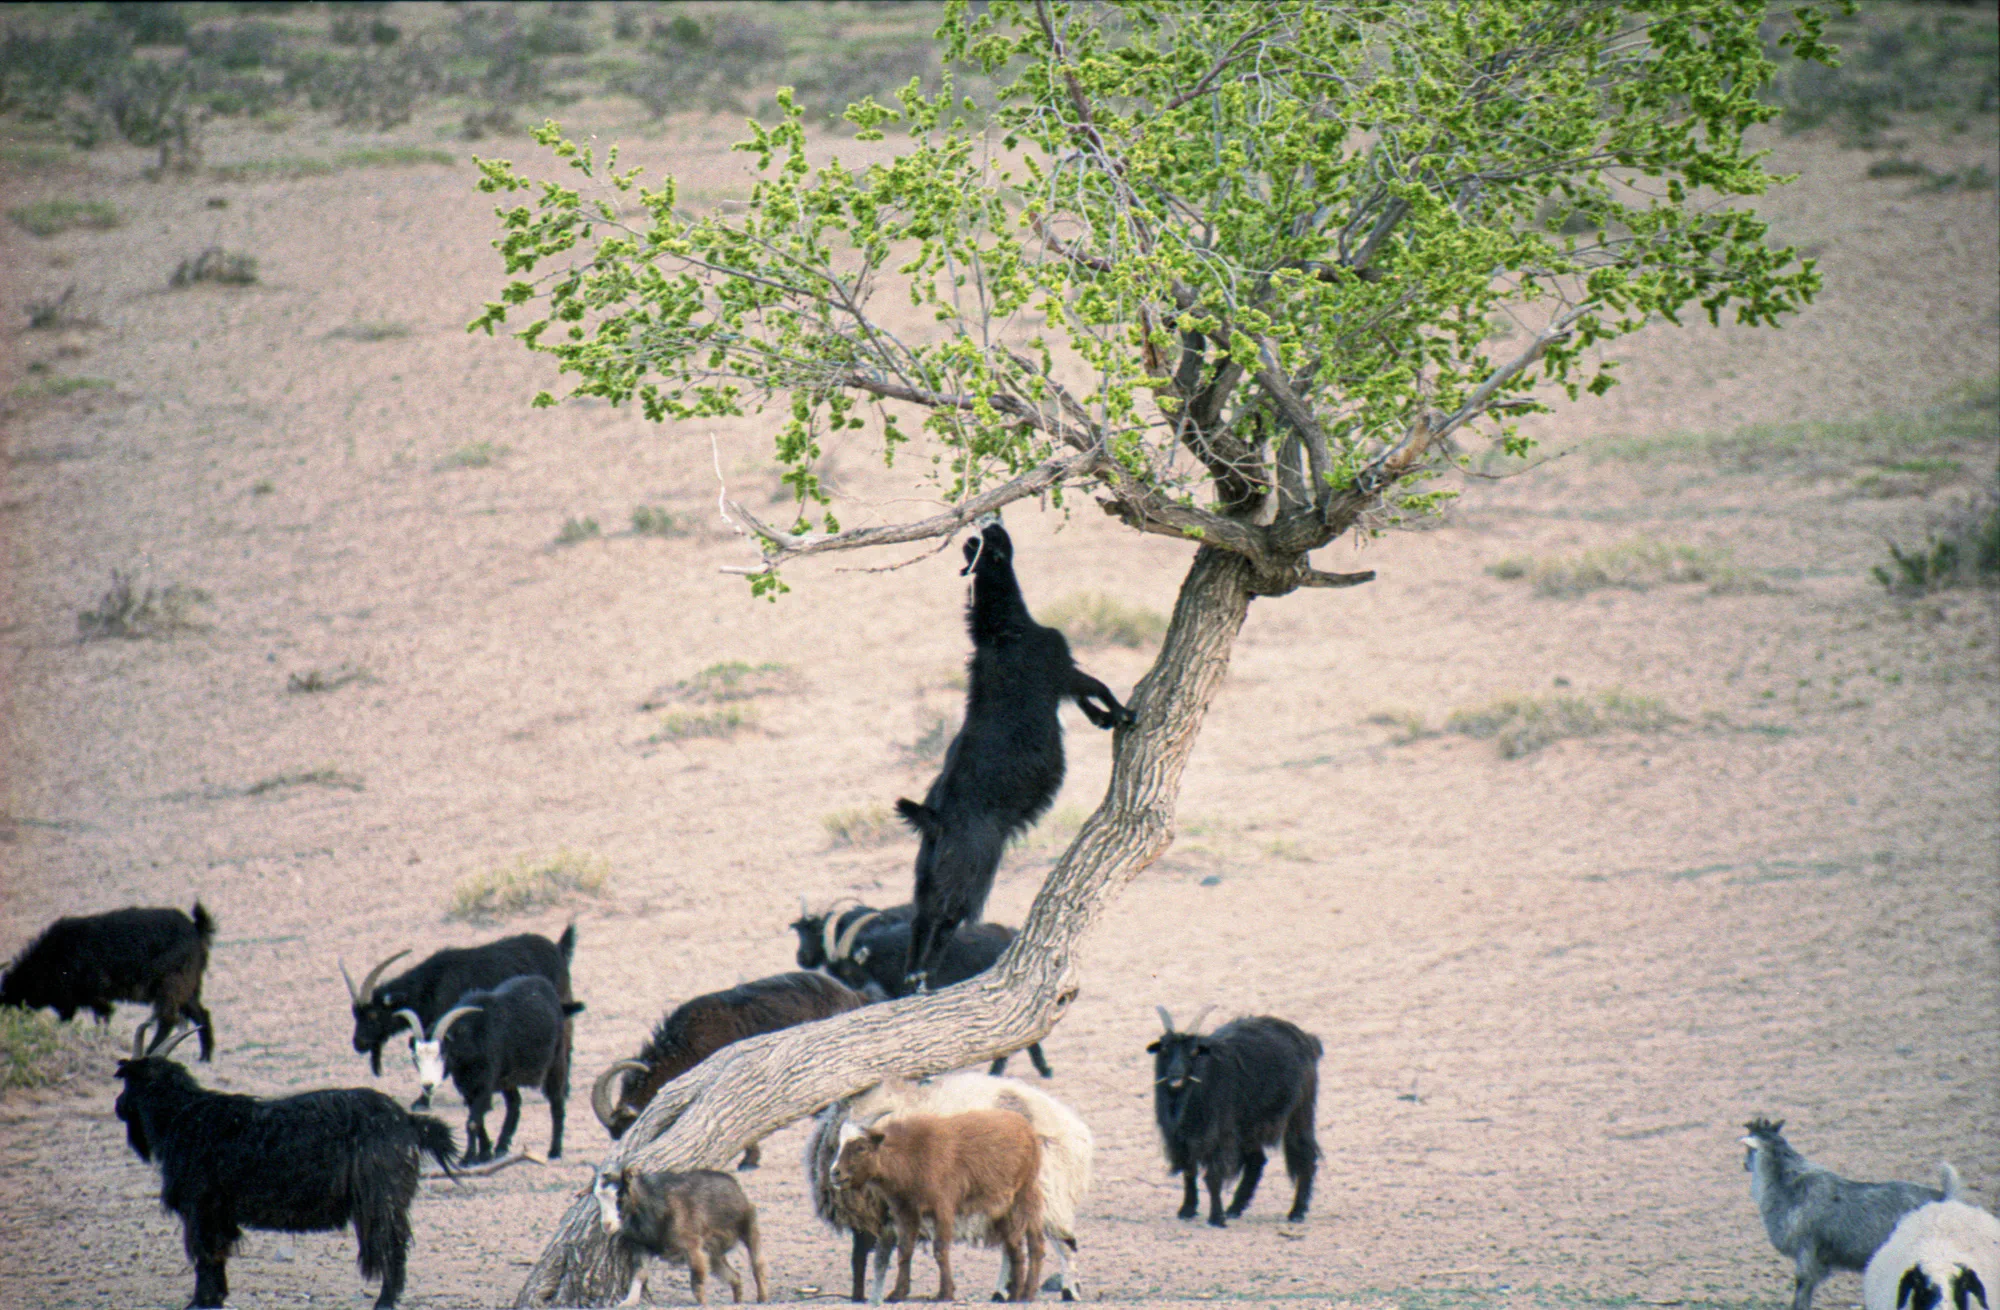 Goats can climb trees